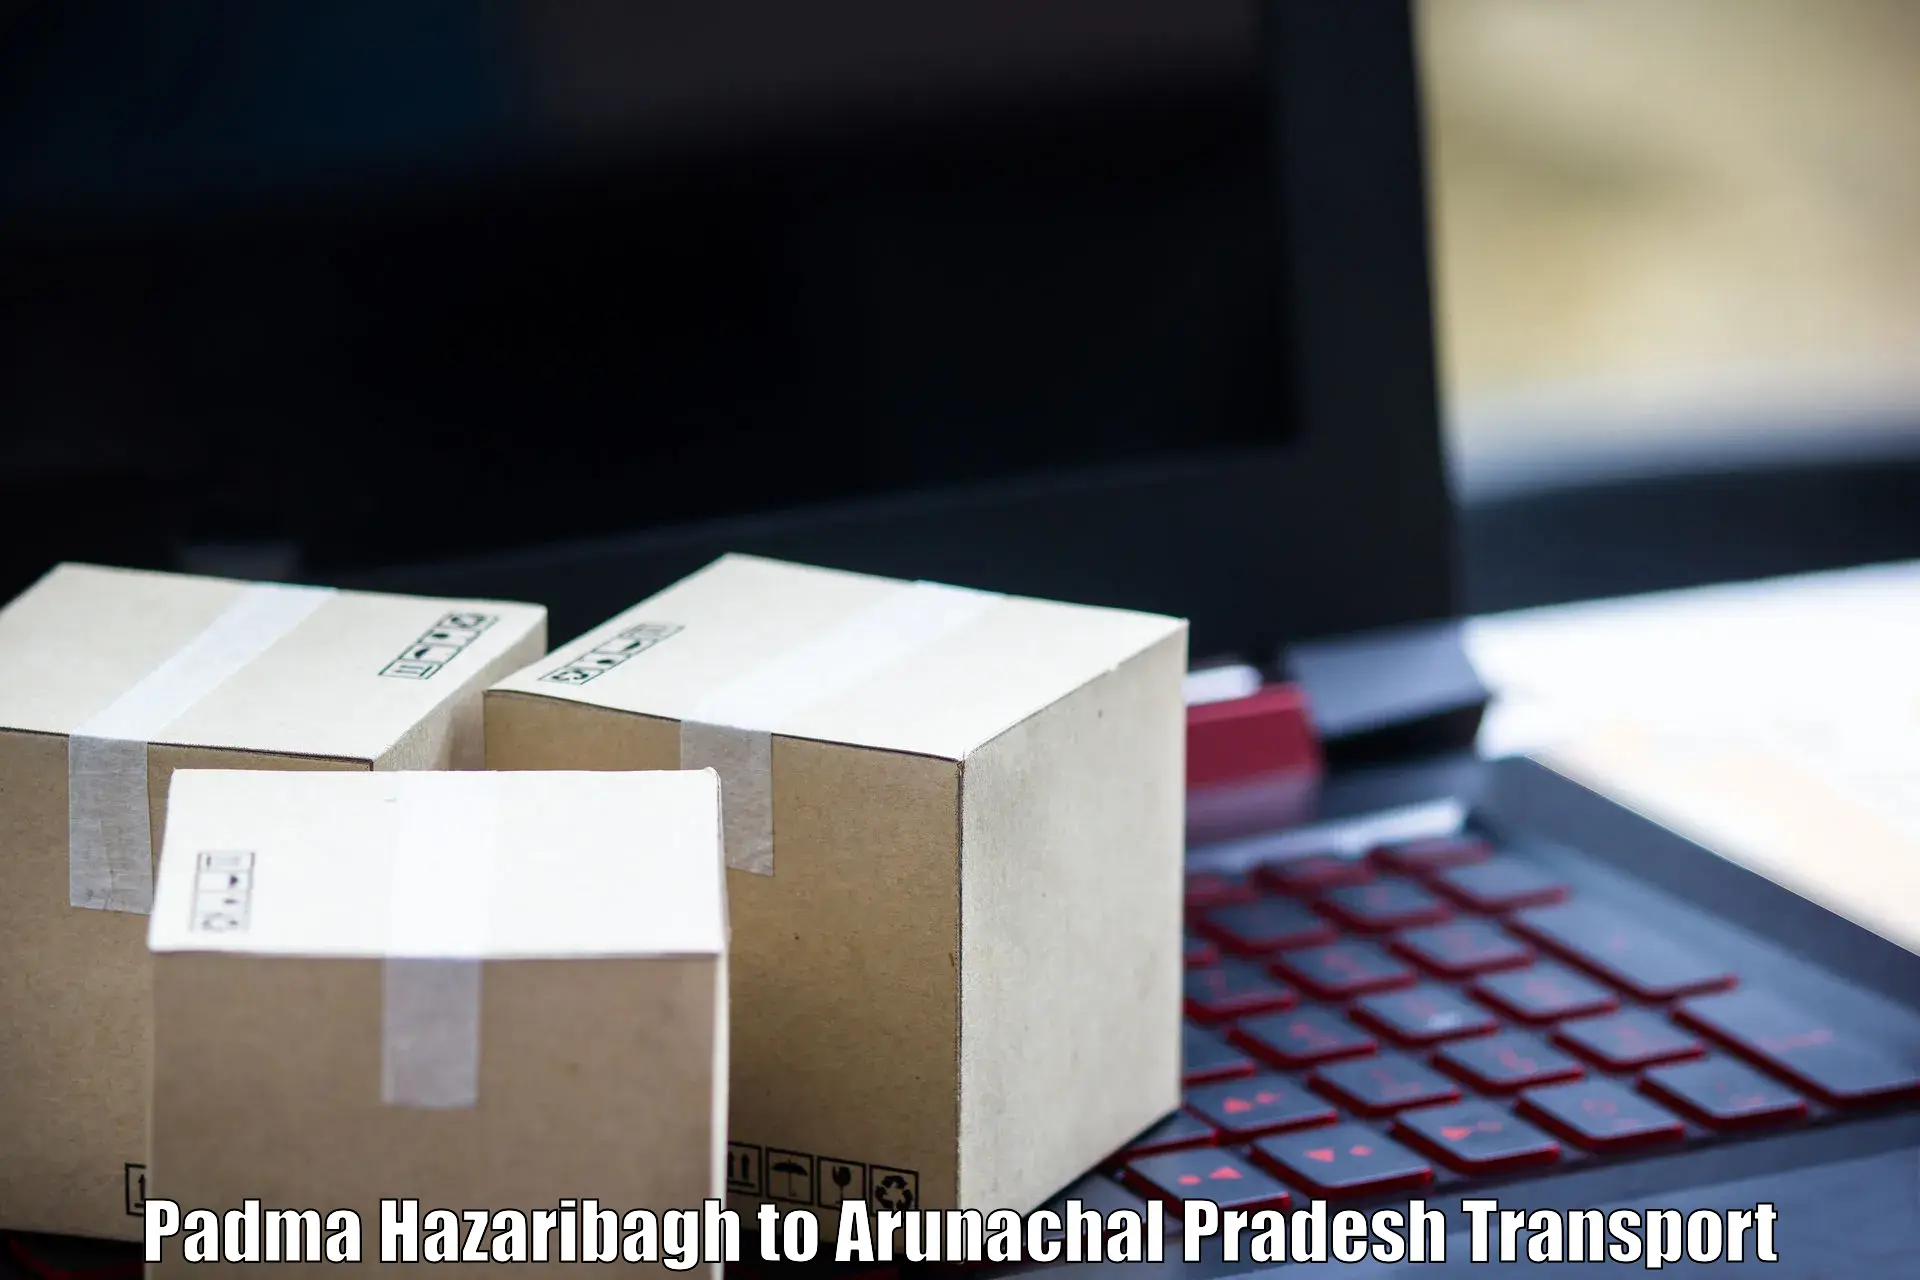 Shipping partner Padma Hazaribagh to Arunachal Pradesh